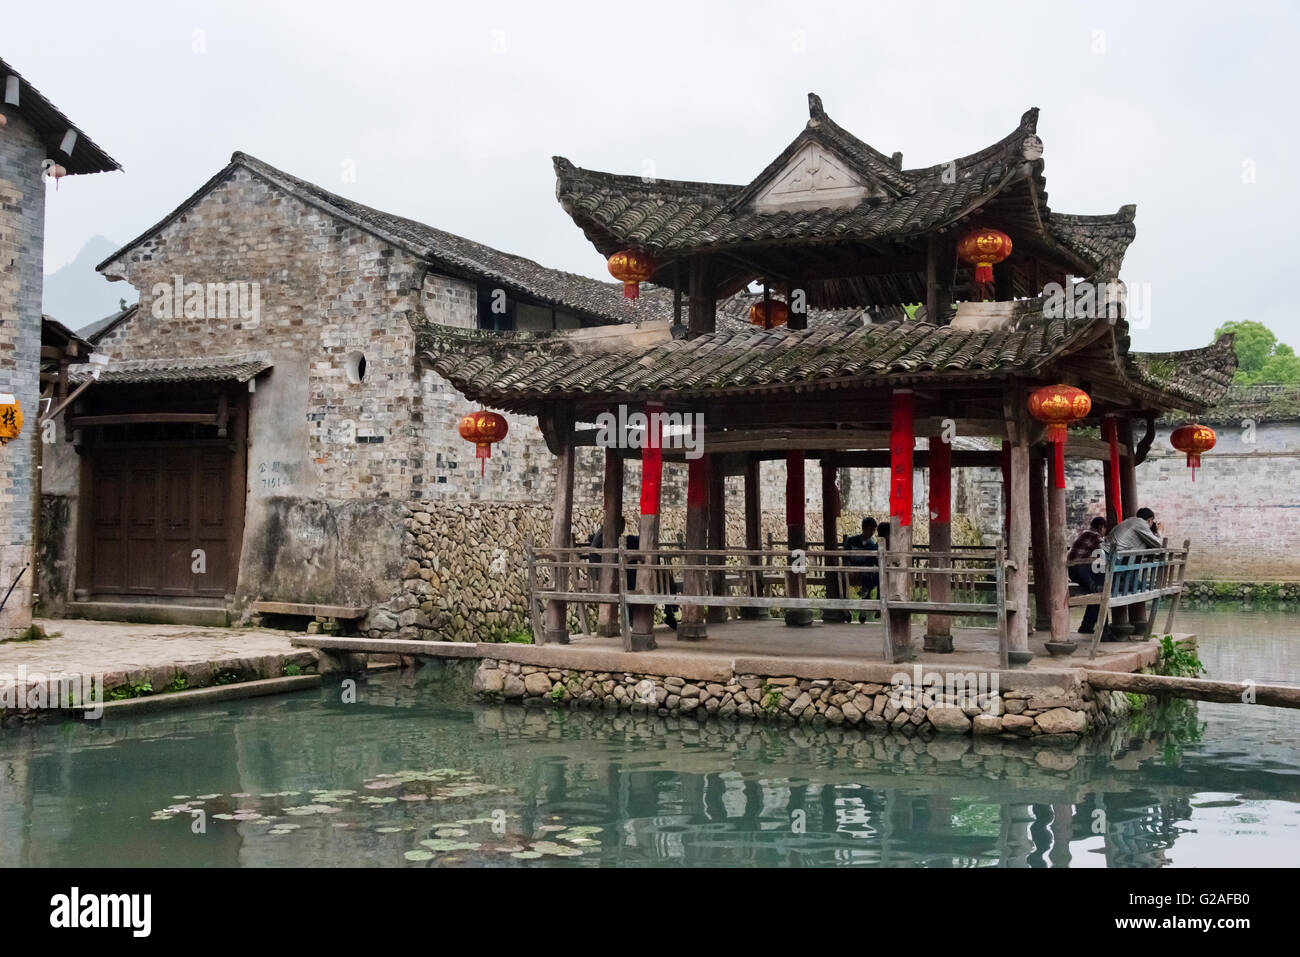 Pavilion on the water, Furong Old Village, Zhejiang Province, China Stock Photo